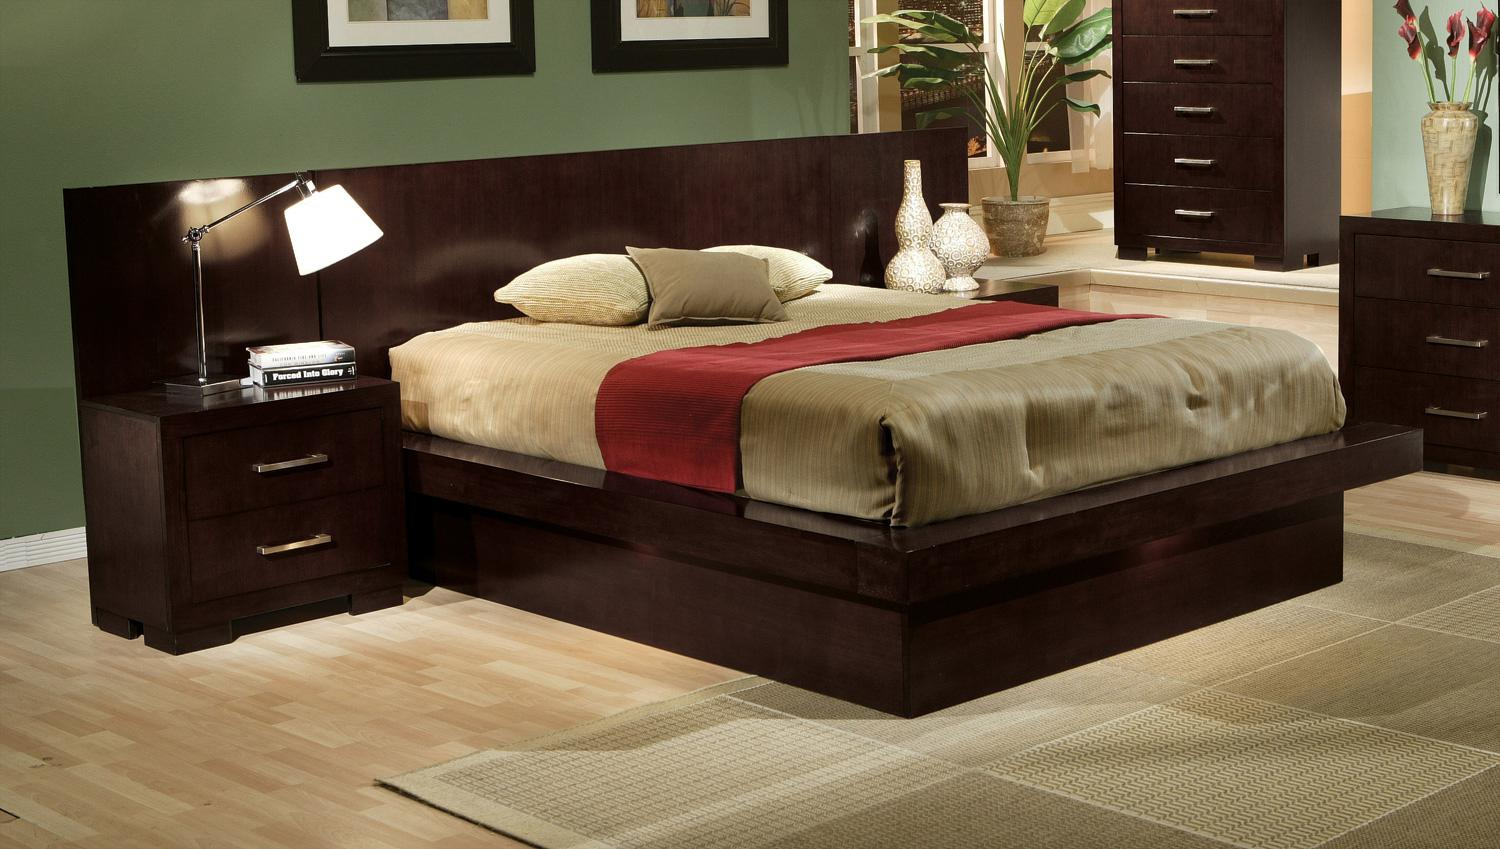 Modern 4 Pc Platform Bed Queen Bedroom Fairfax Va Furniture Stores within dimensions 1500 X 849